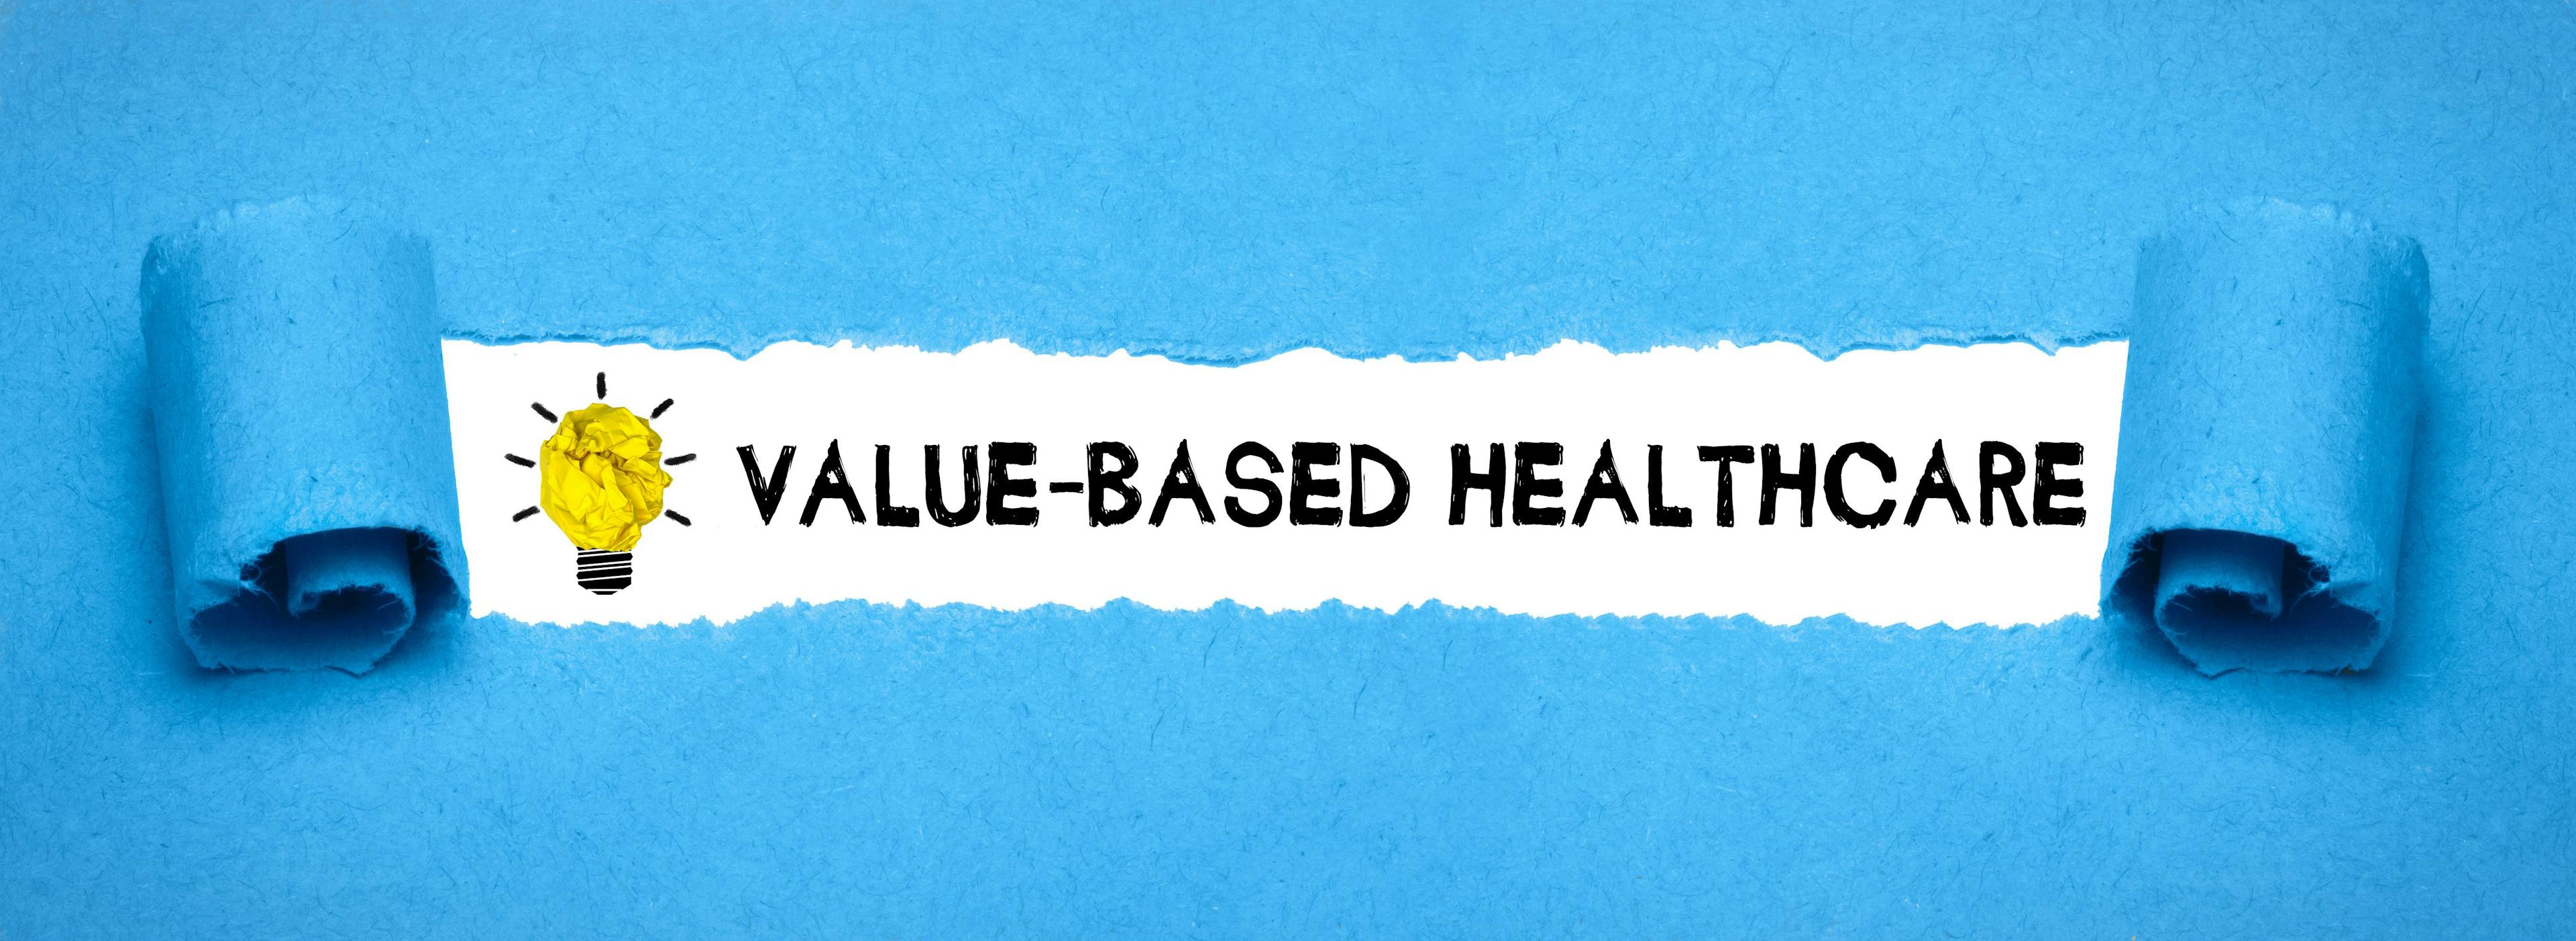 value-based healthcare peel back paper